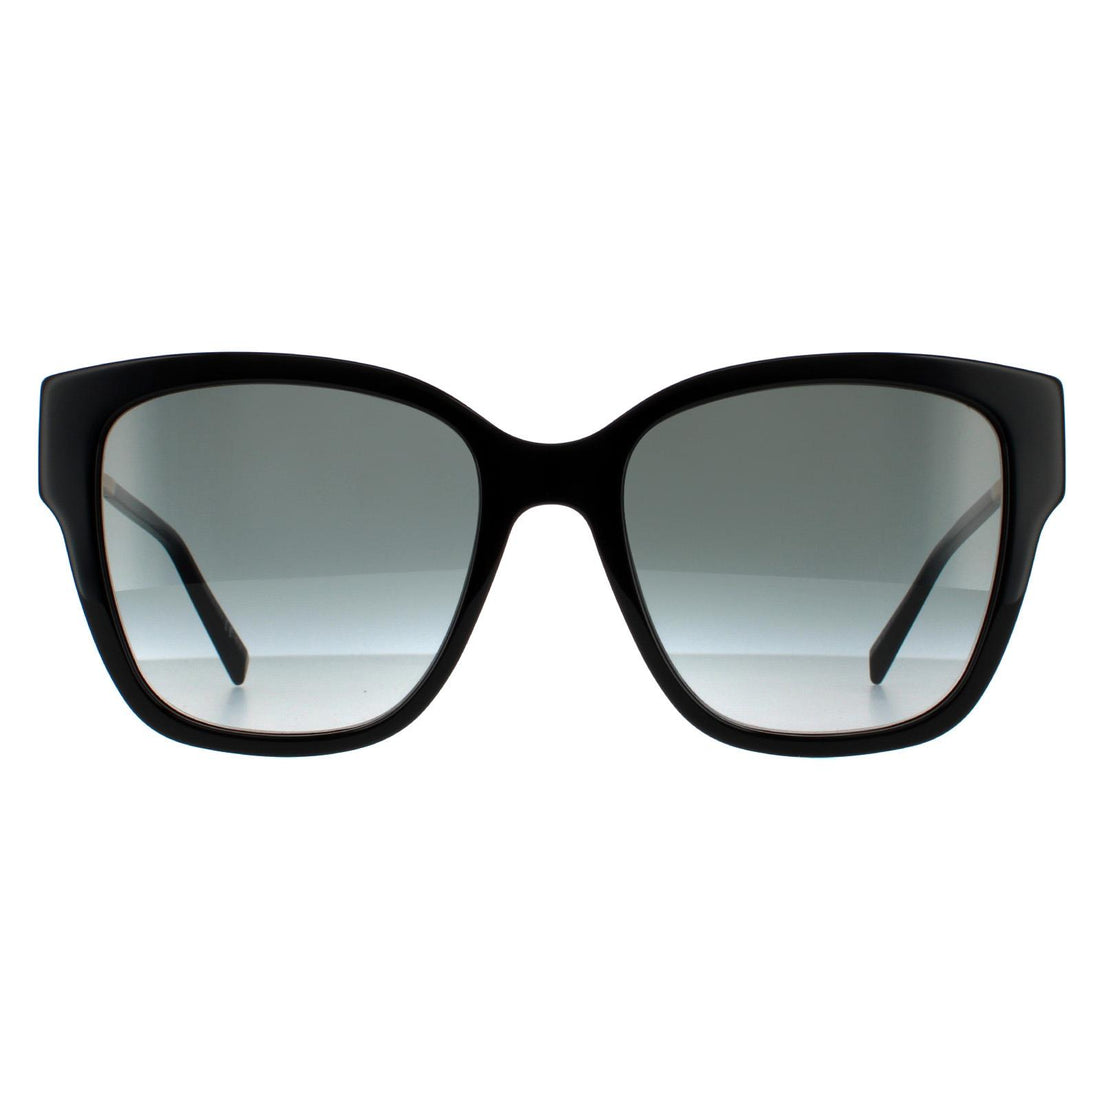 Givenchy GV7191/S Sunglasses Black / Grey Gradient